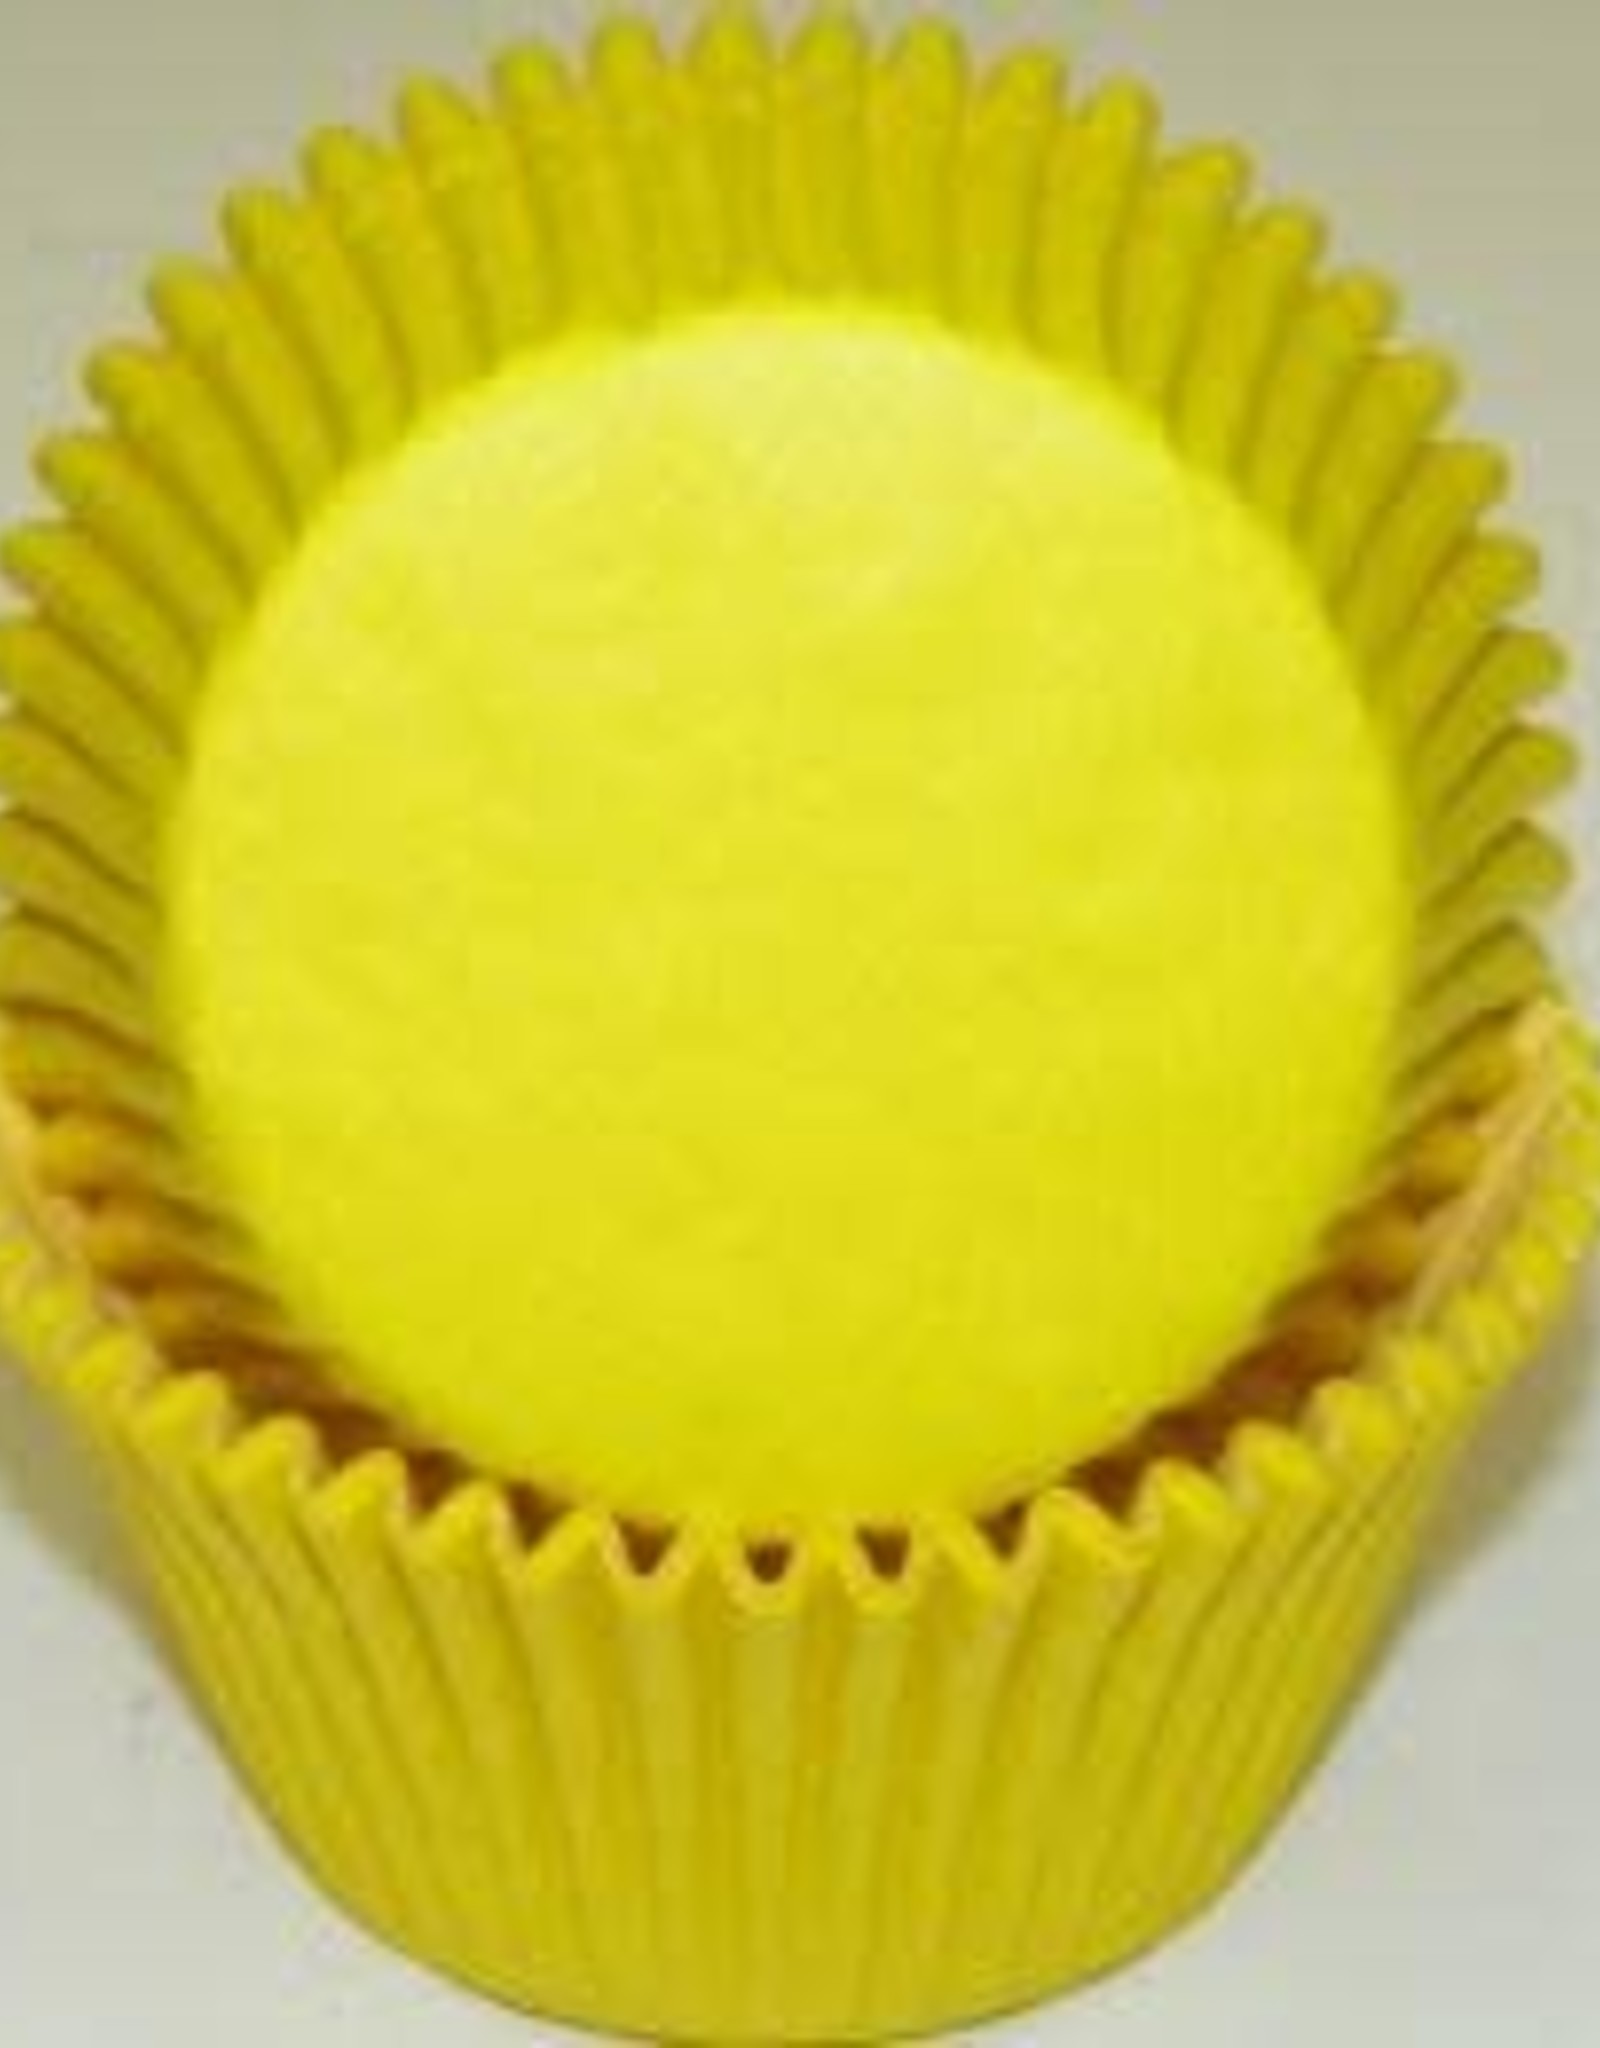 Yellow Jumbo Baking Cups (approx 30 ct)